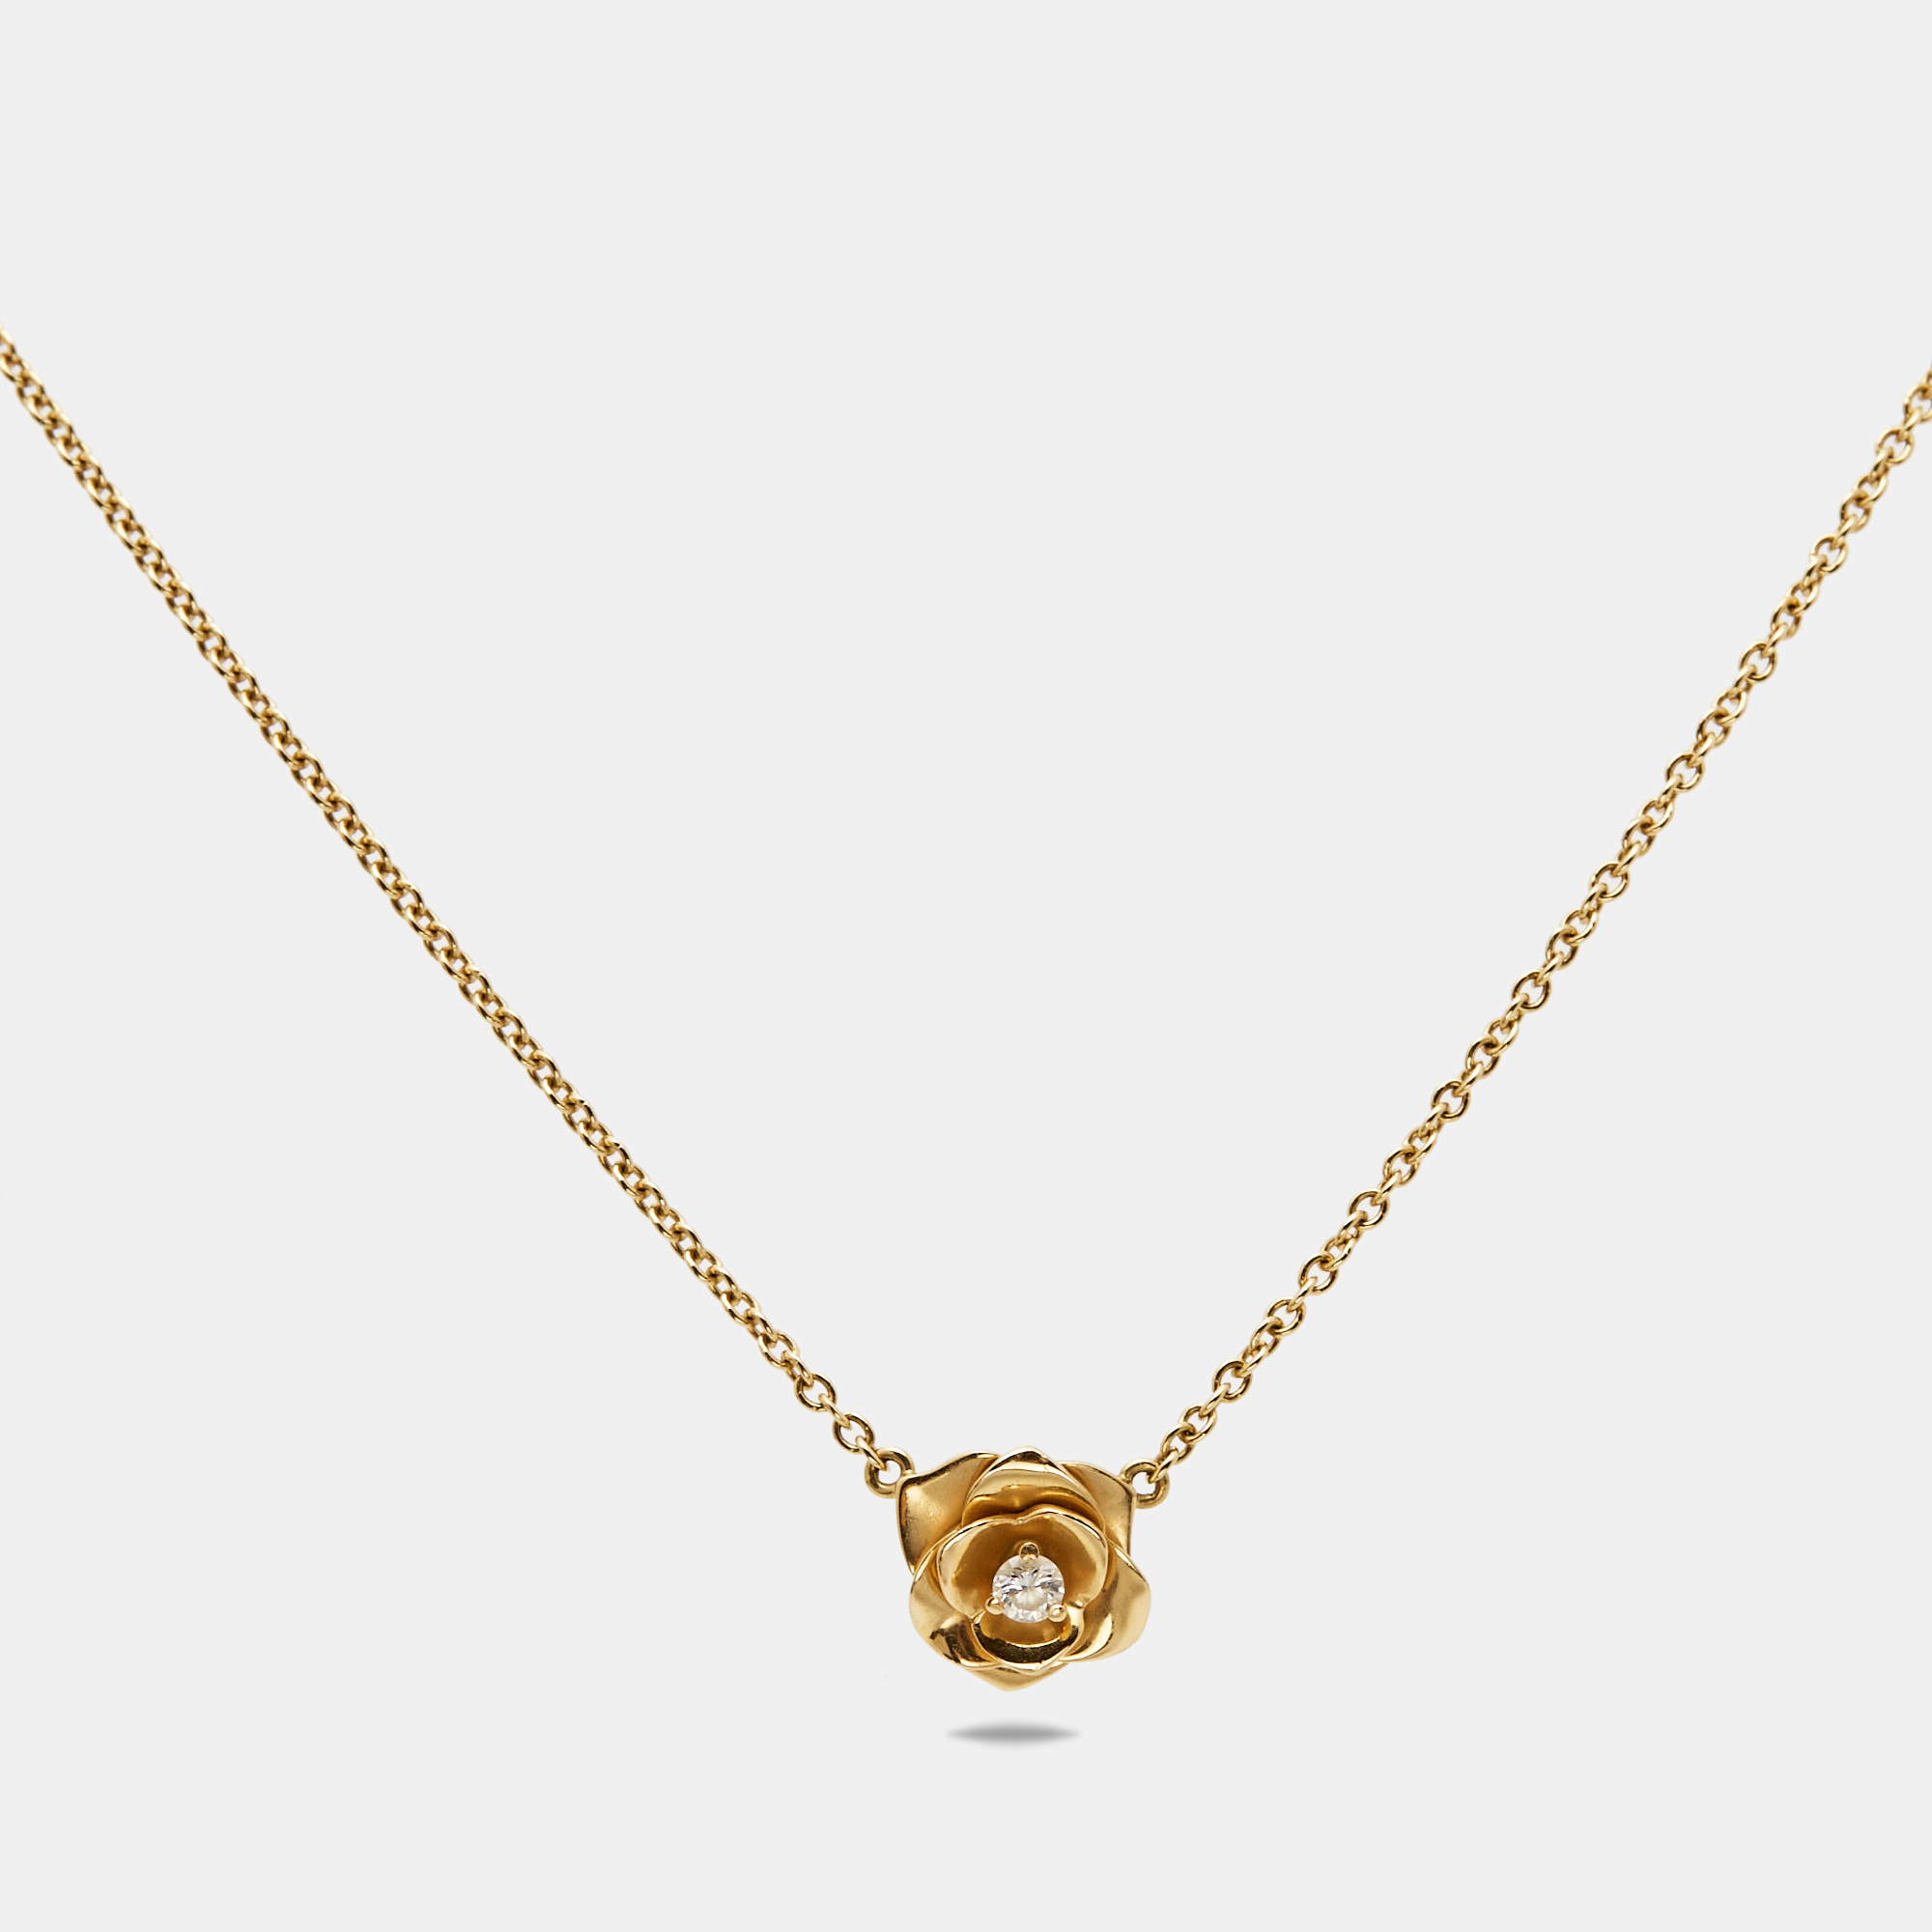 Piaget rose diamond 18k rose gold pendant necklace